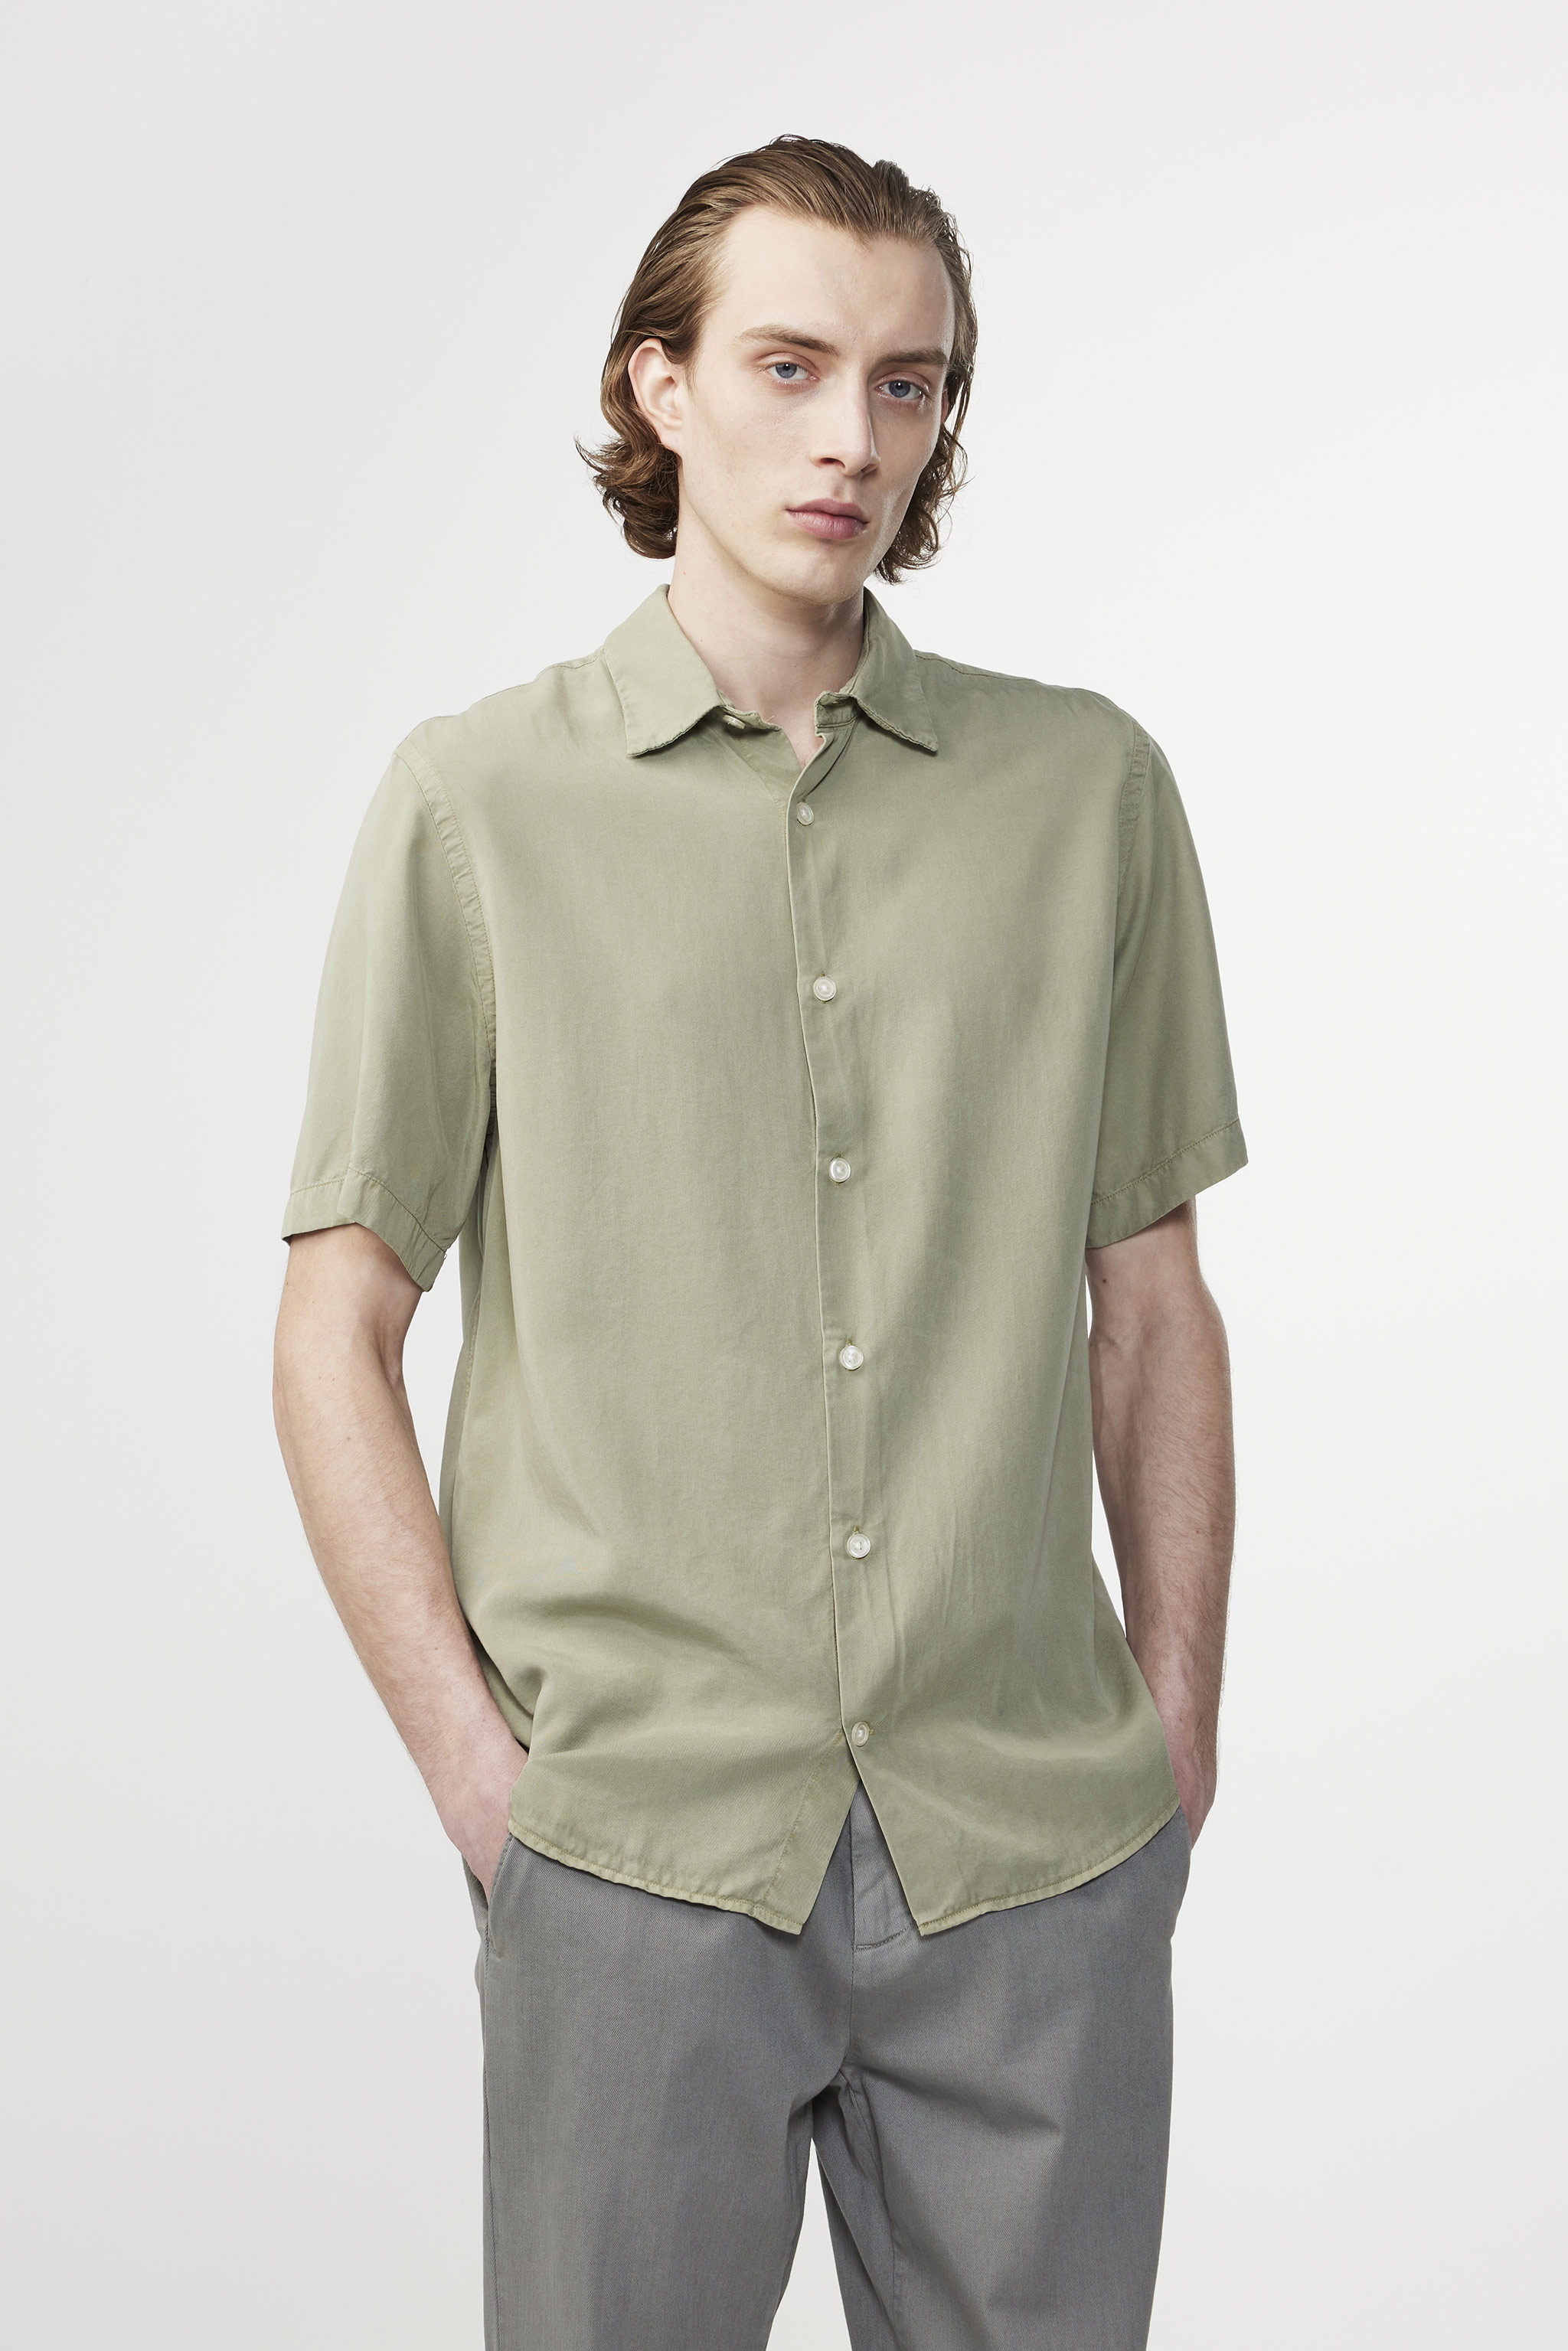 Errico 5968 men's shirt - Green - Buy online at NN.07®